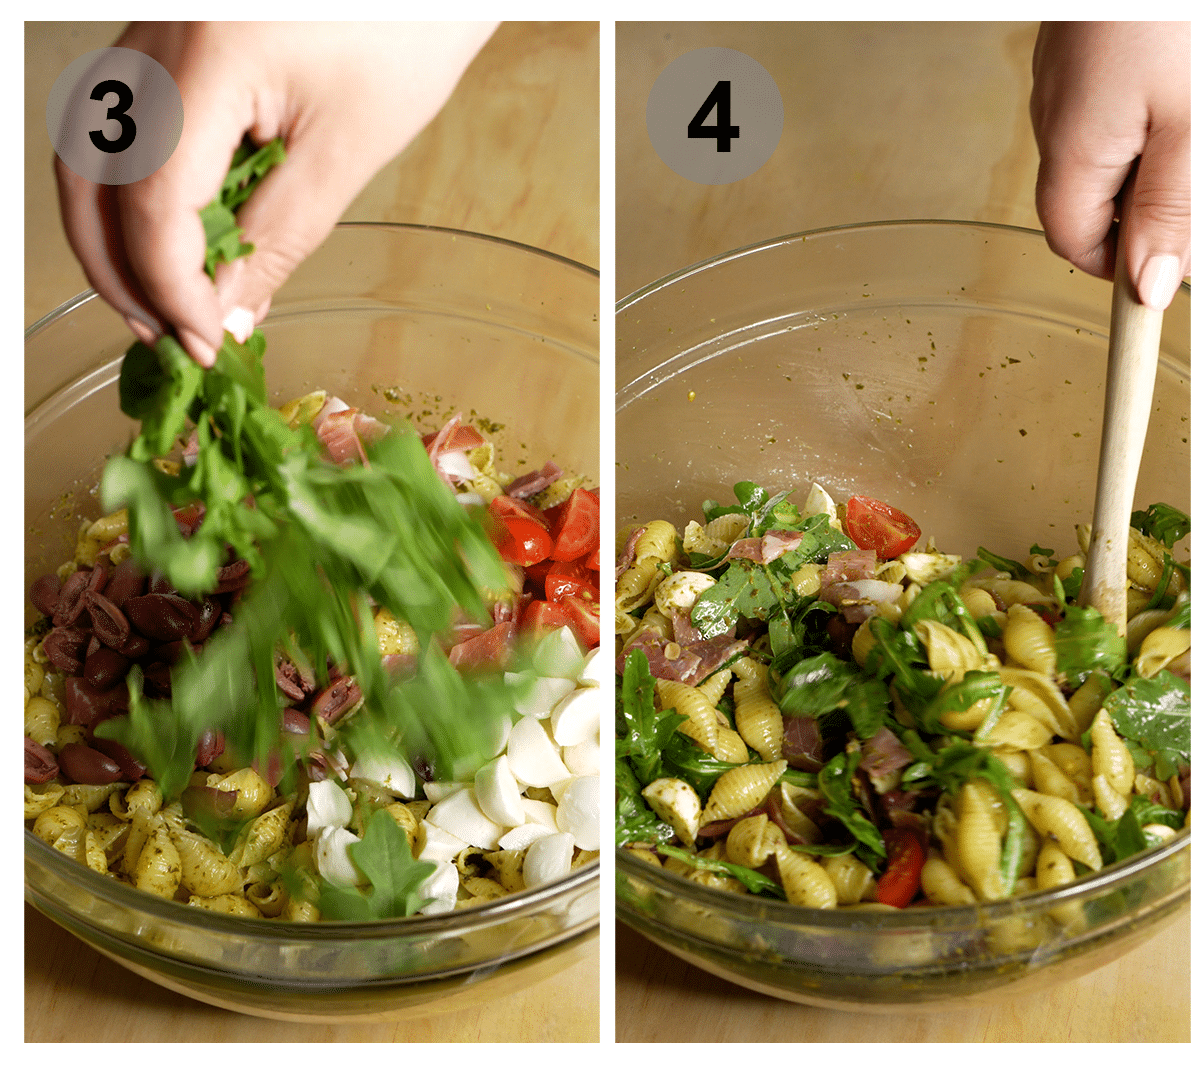 Step by step photos on how to make arugula pasta salad (steps #3-4)